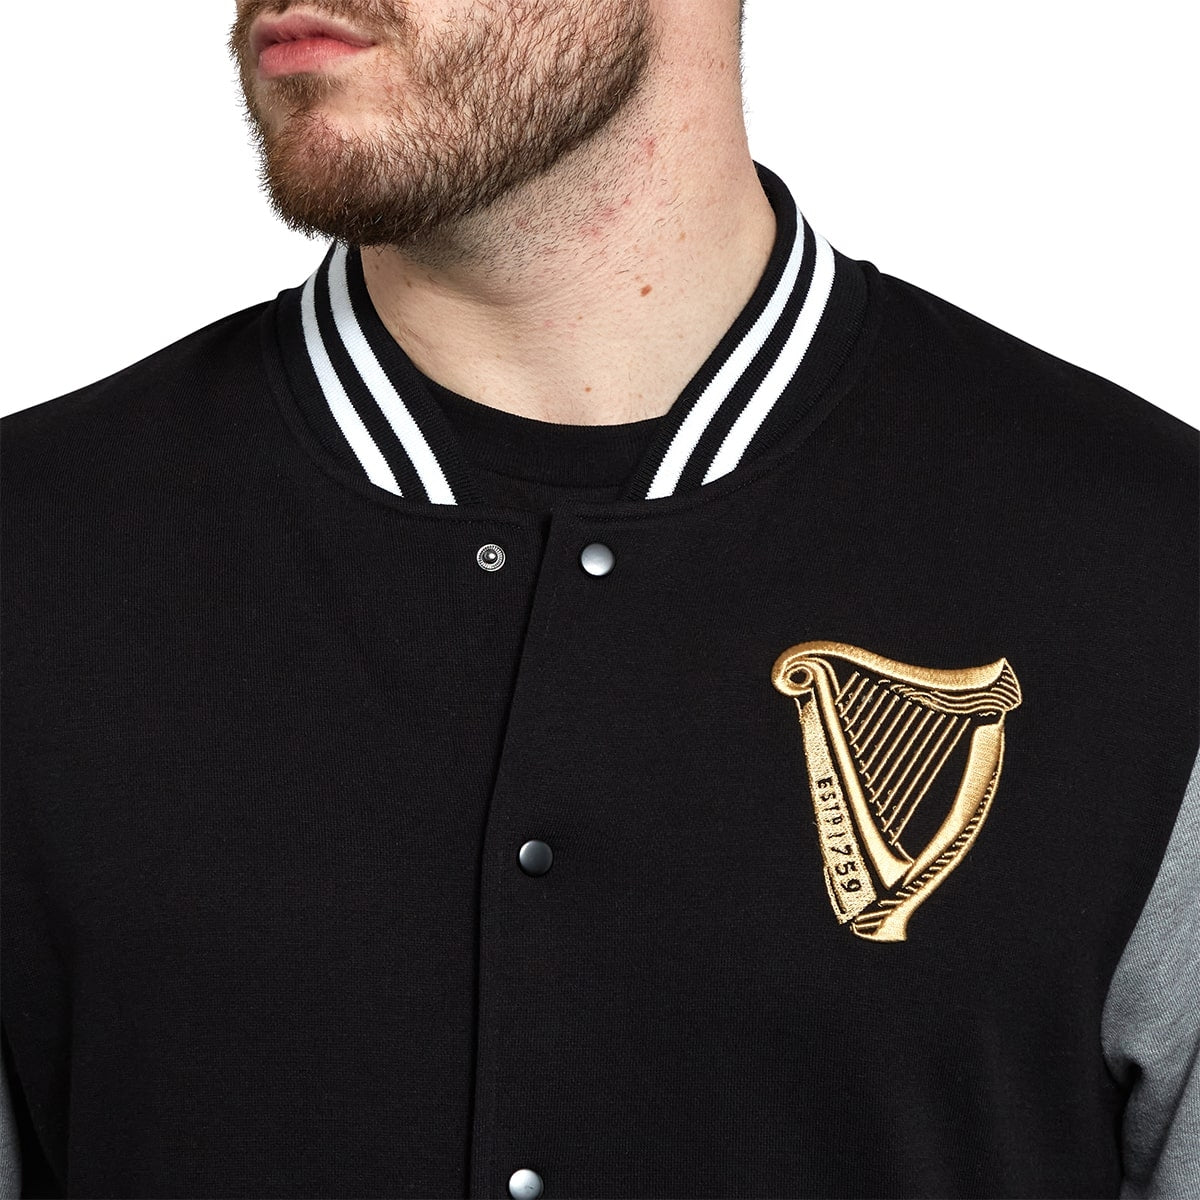 A man wearing a Guinness Letterman jacket.